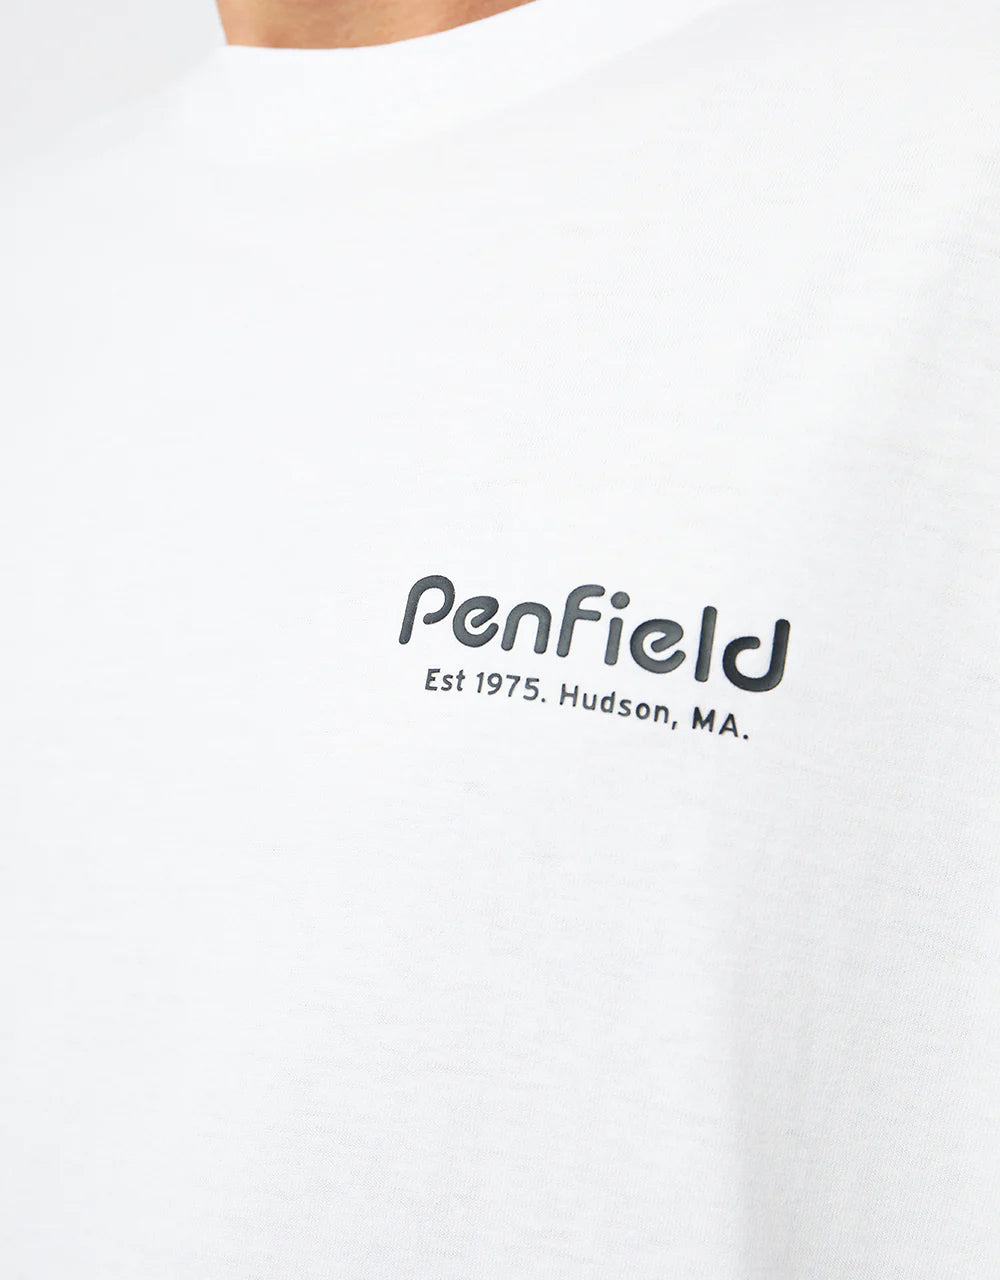 Penfield Ridge Trail Back Graphic T-Shirt White